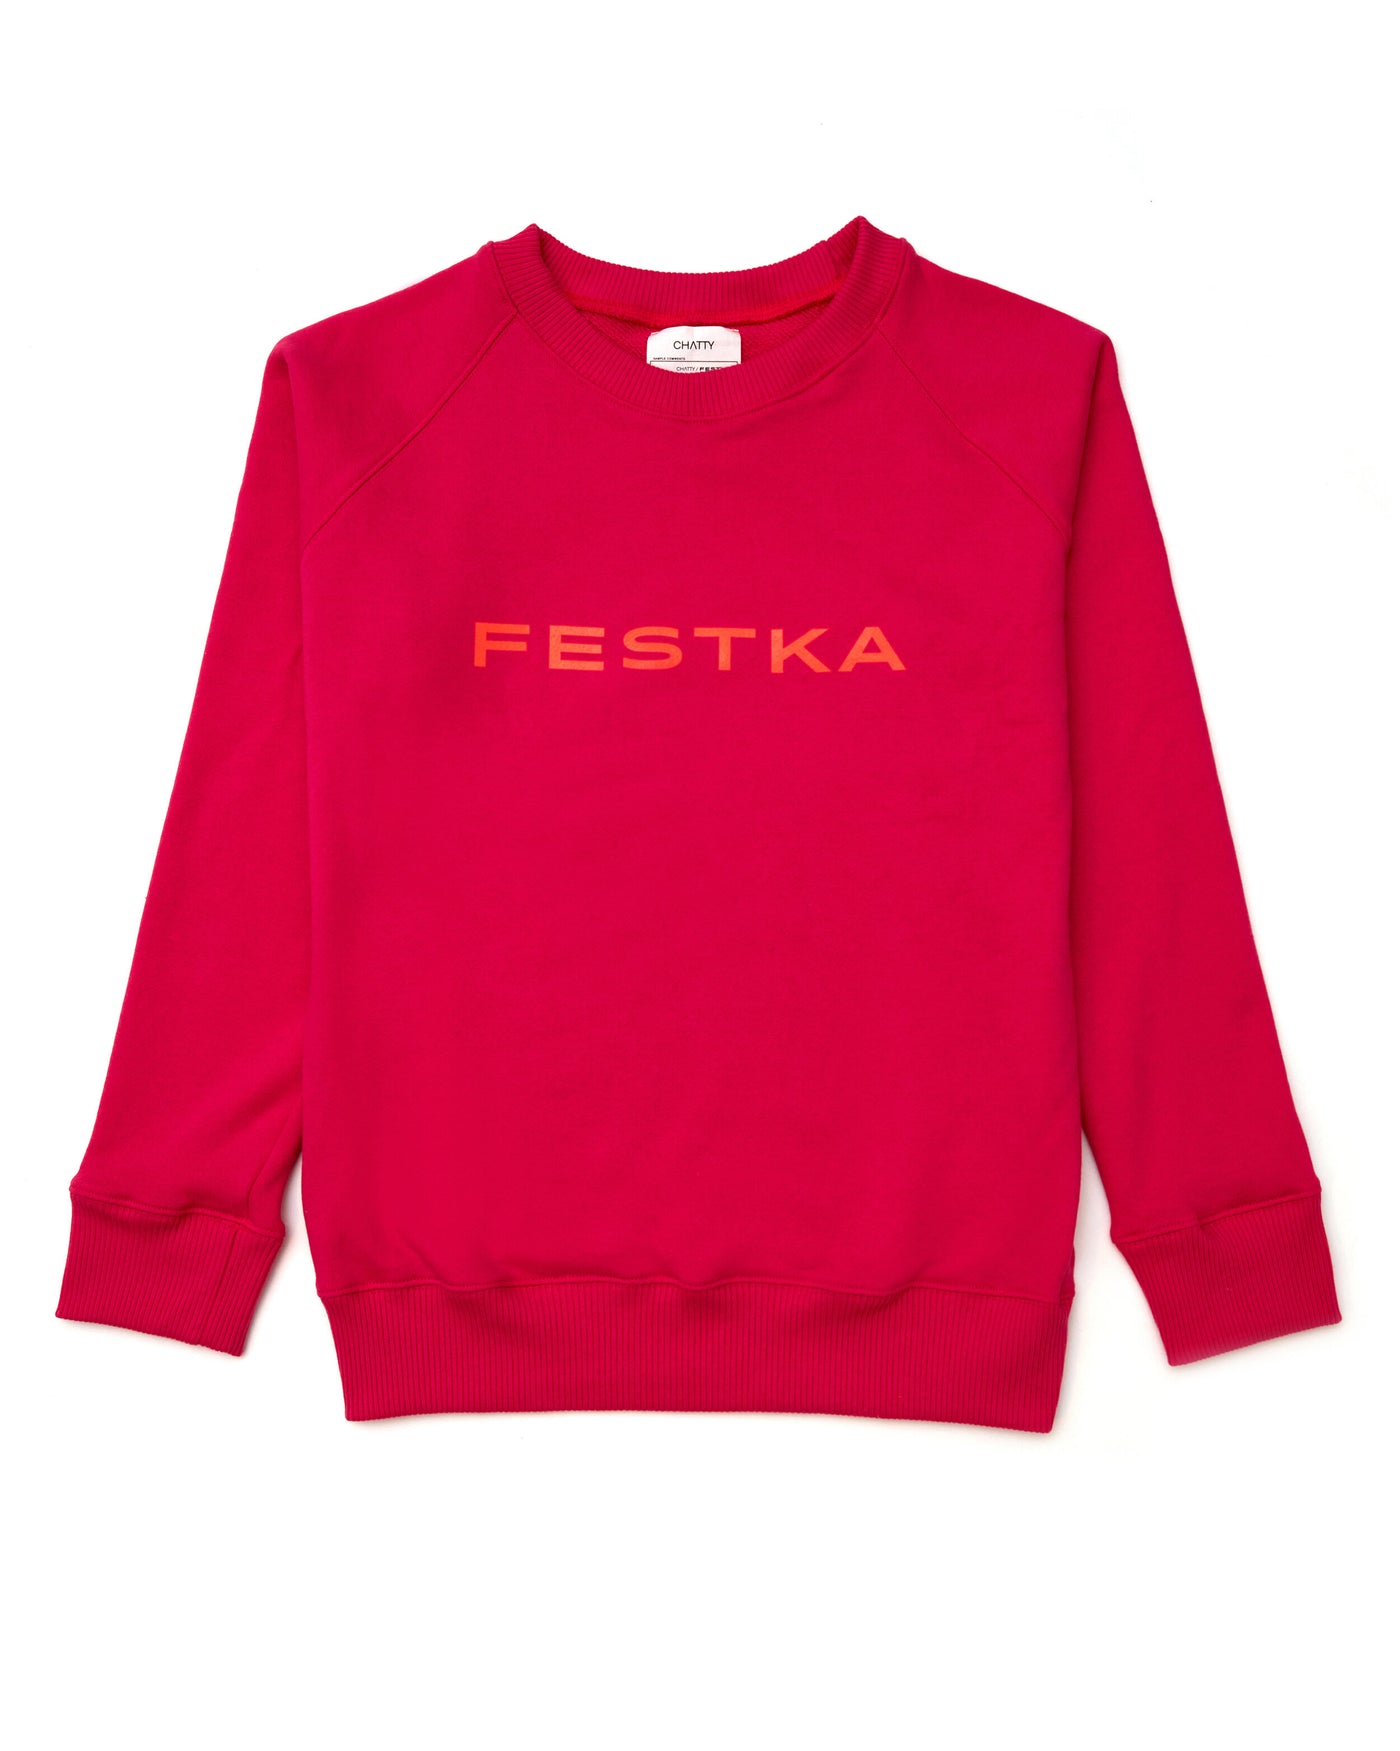 Festka x CHATTY sweatshirt PINK